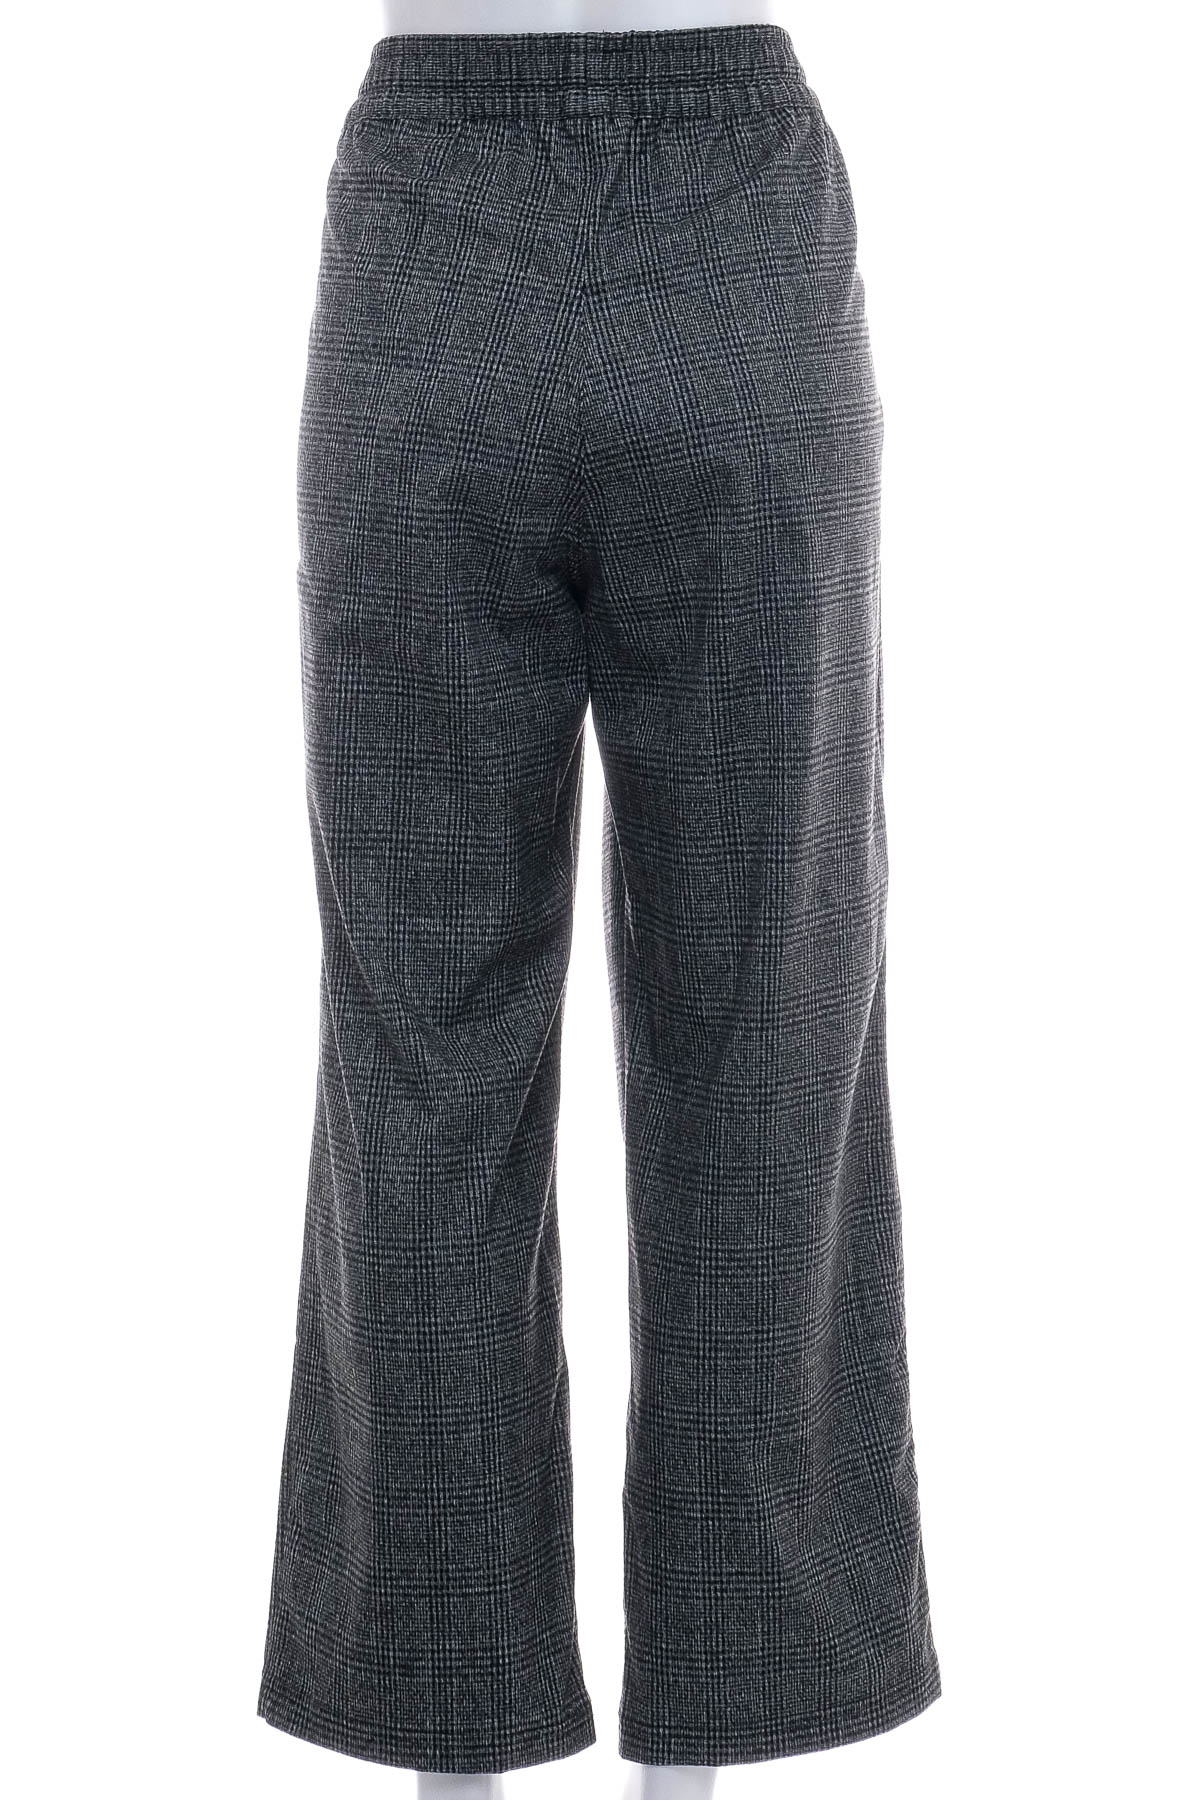 Women's trousers - H&M - 1